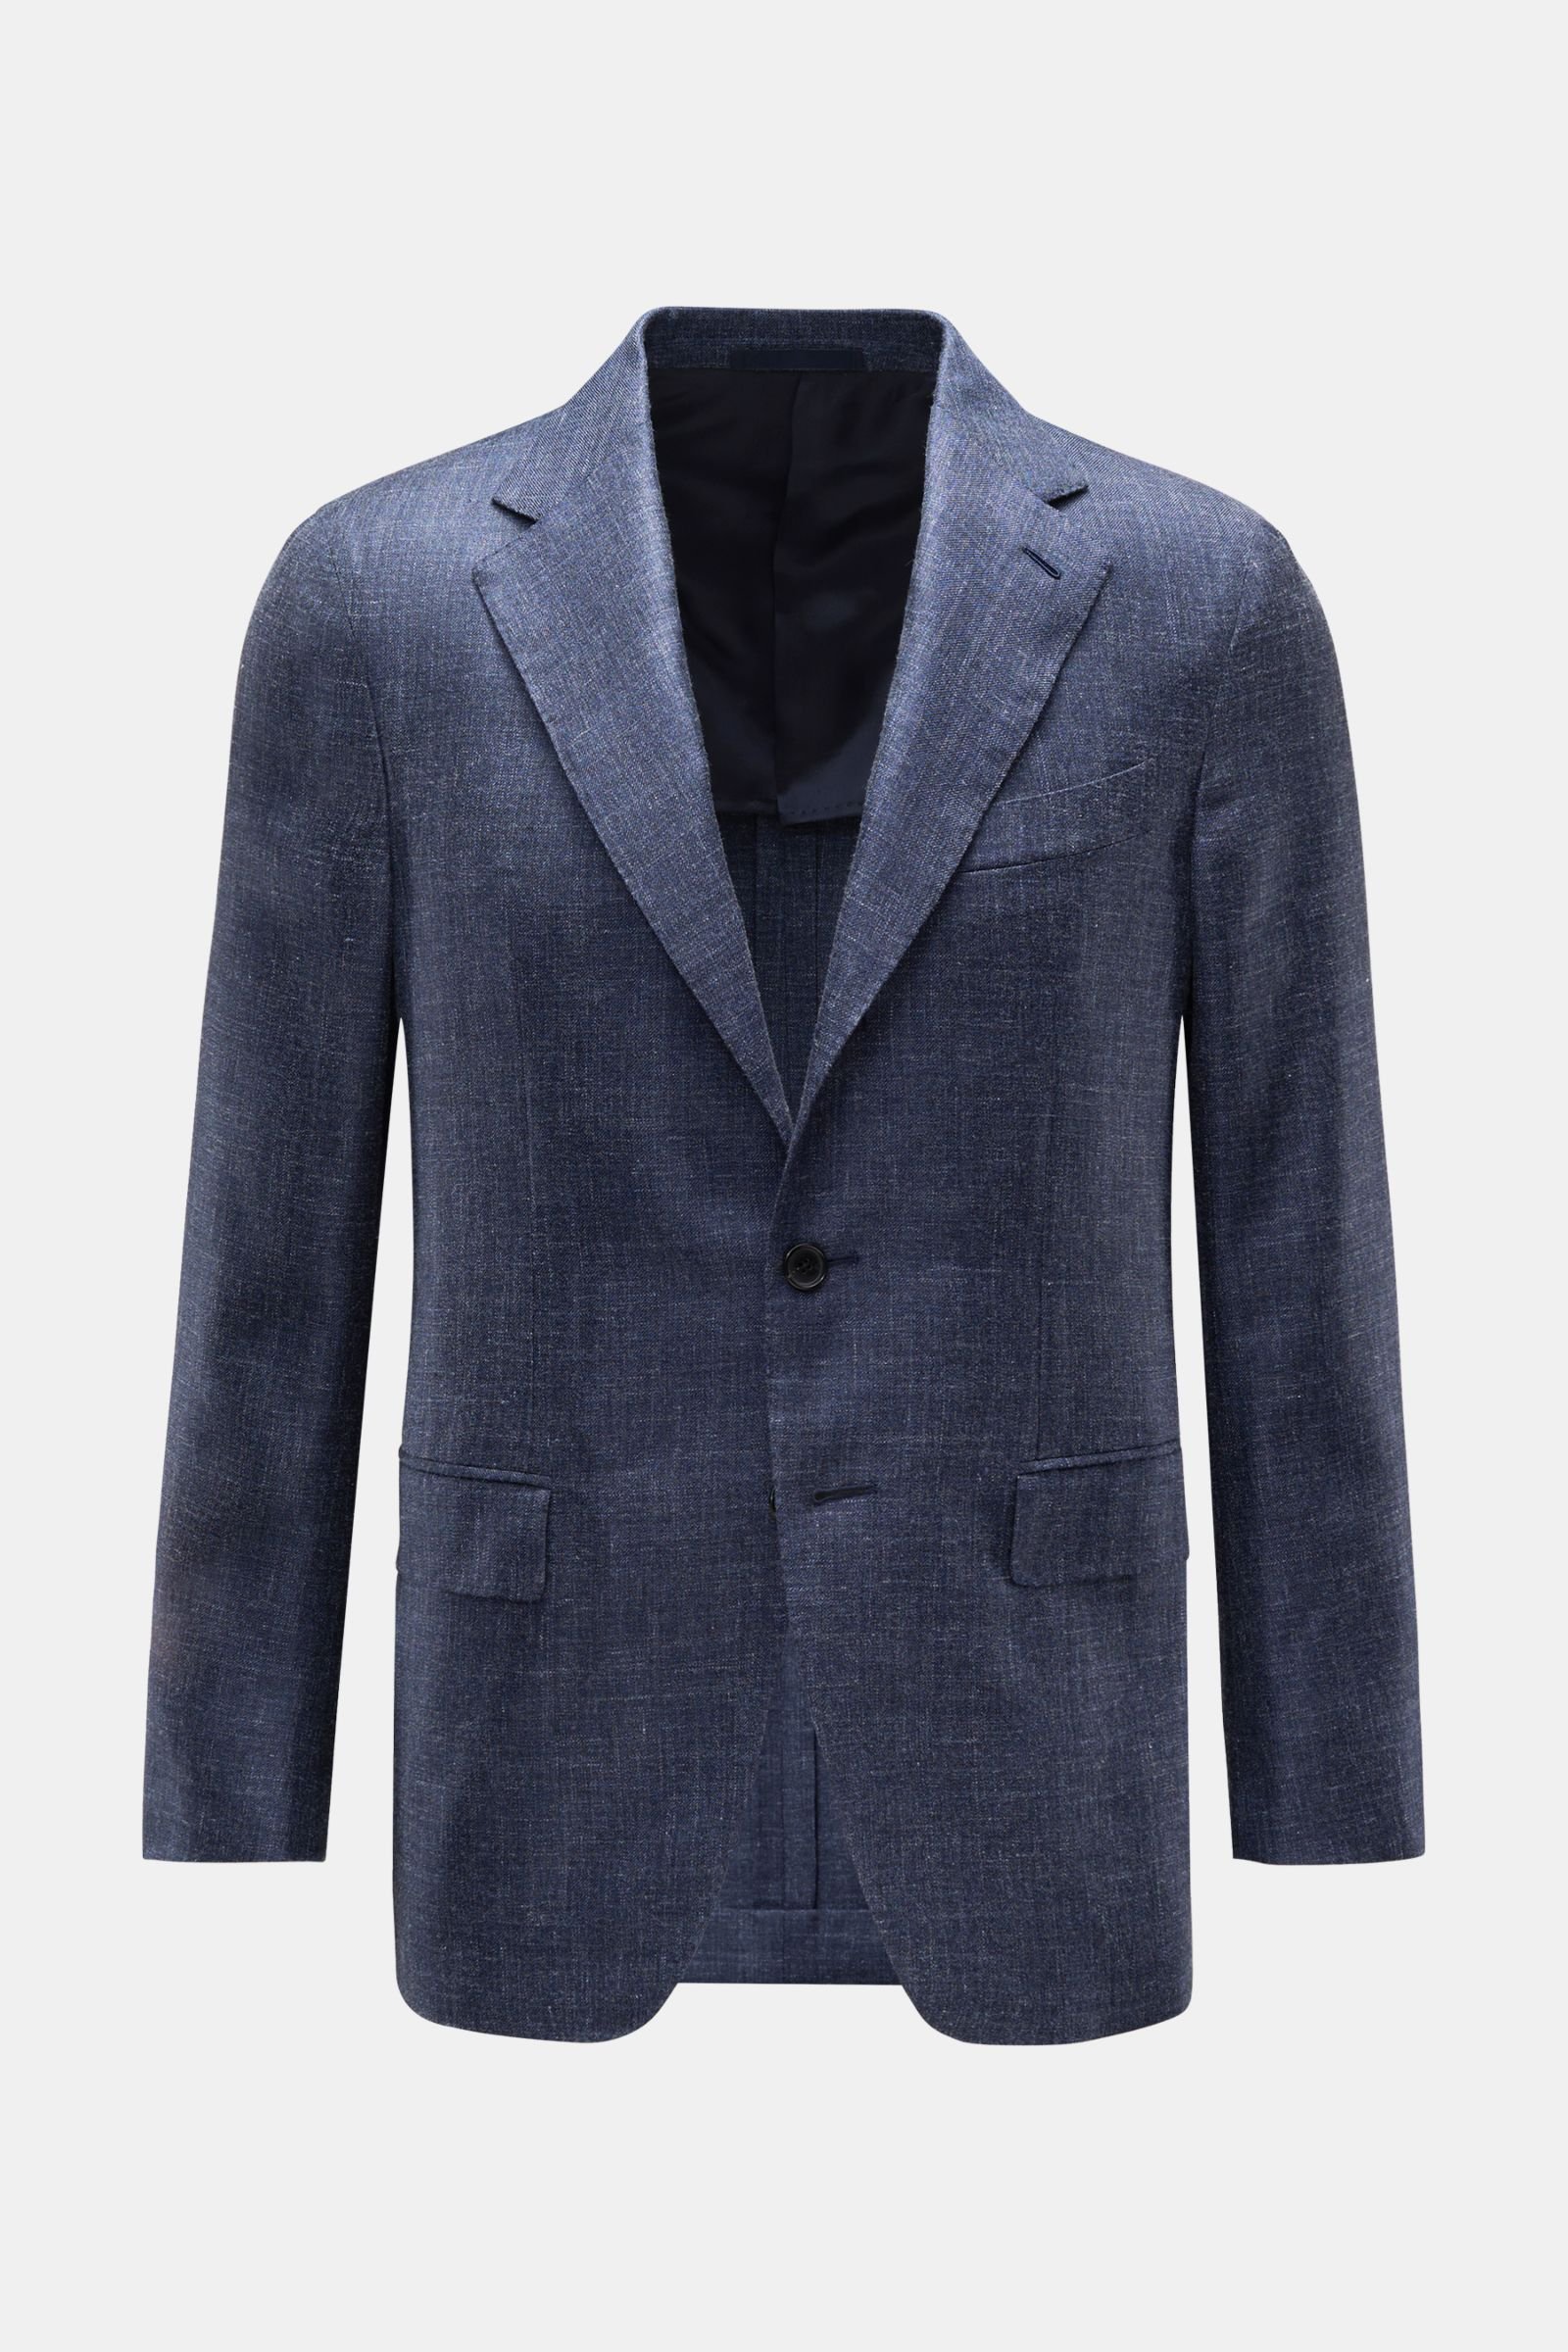 Smart-casual jacket 'Aida' grey-blue